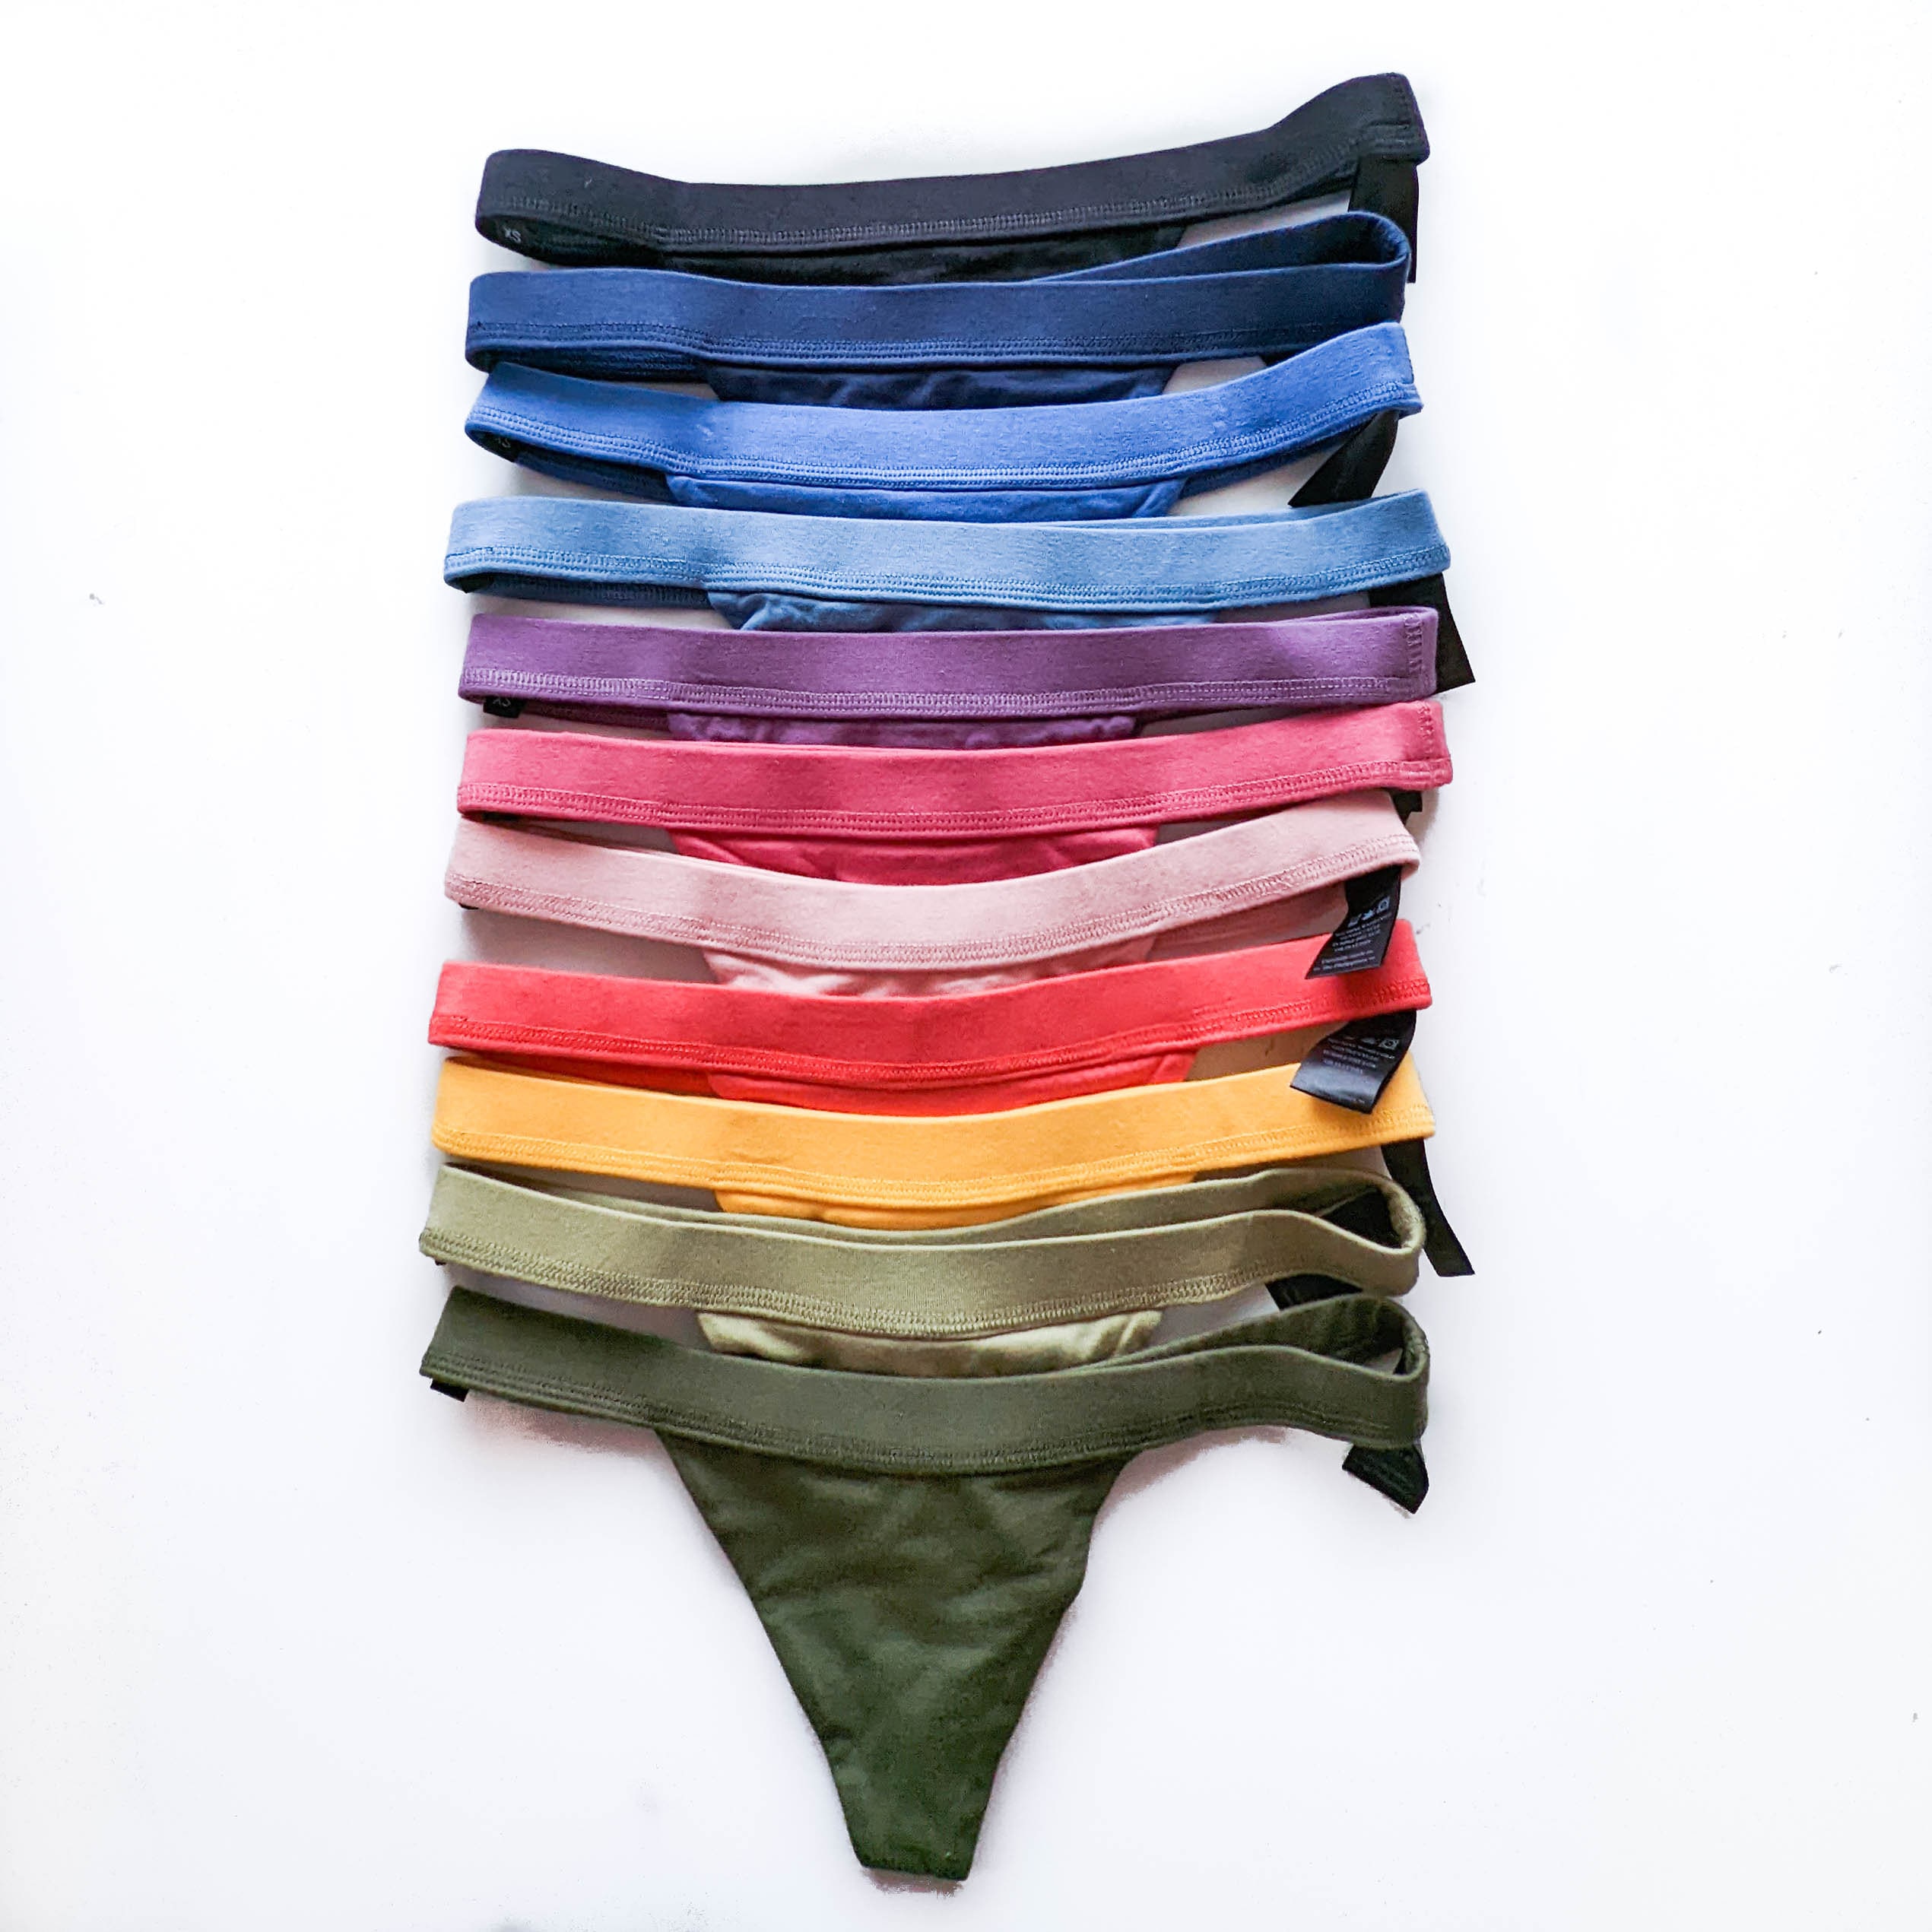 Shero Leakproof Hipster Period Underwear, Odor Control & Moisture